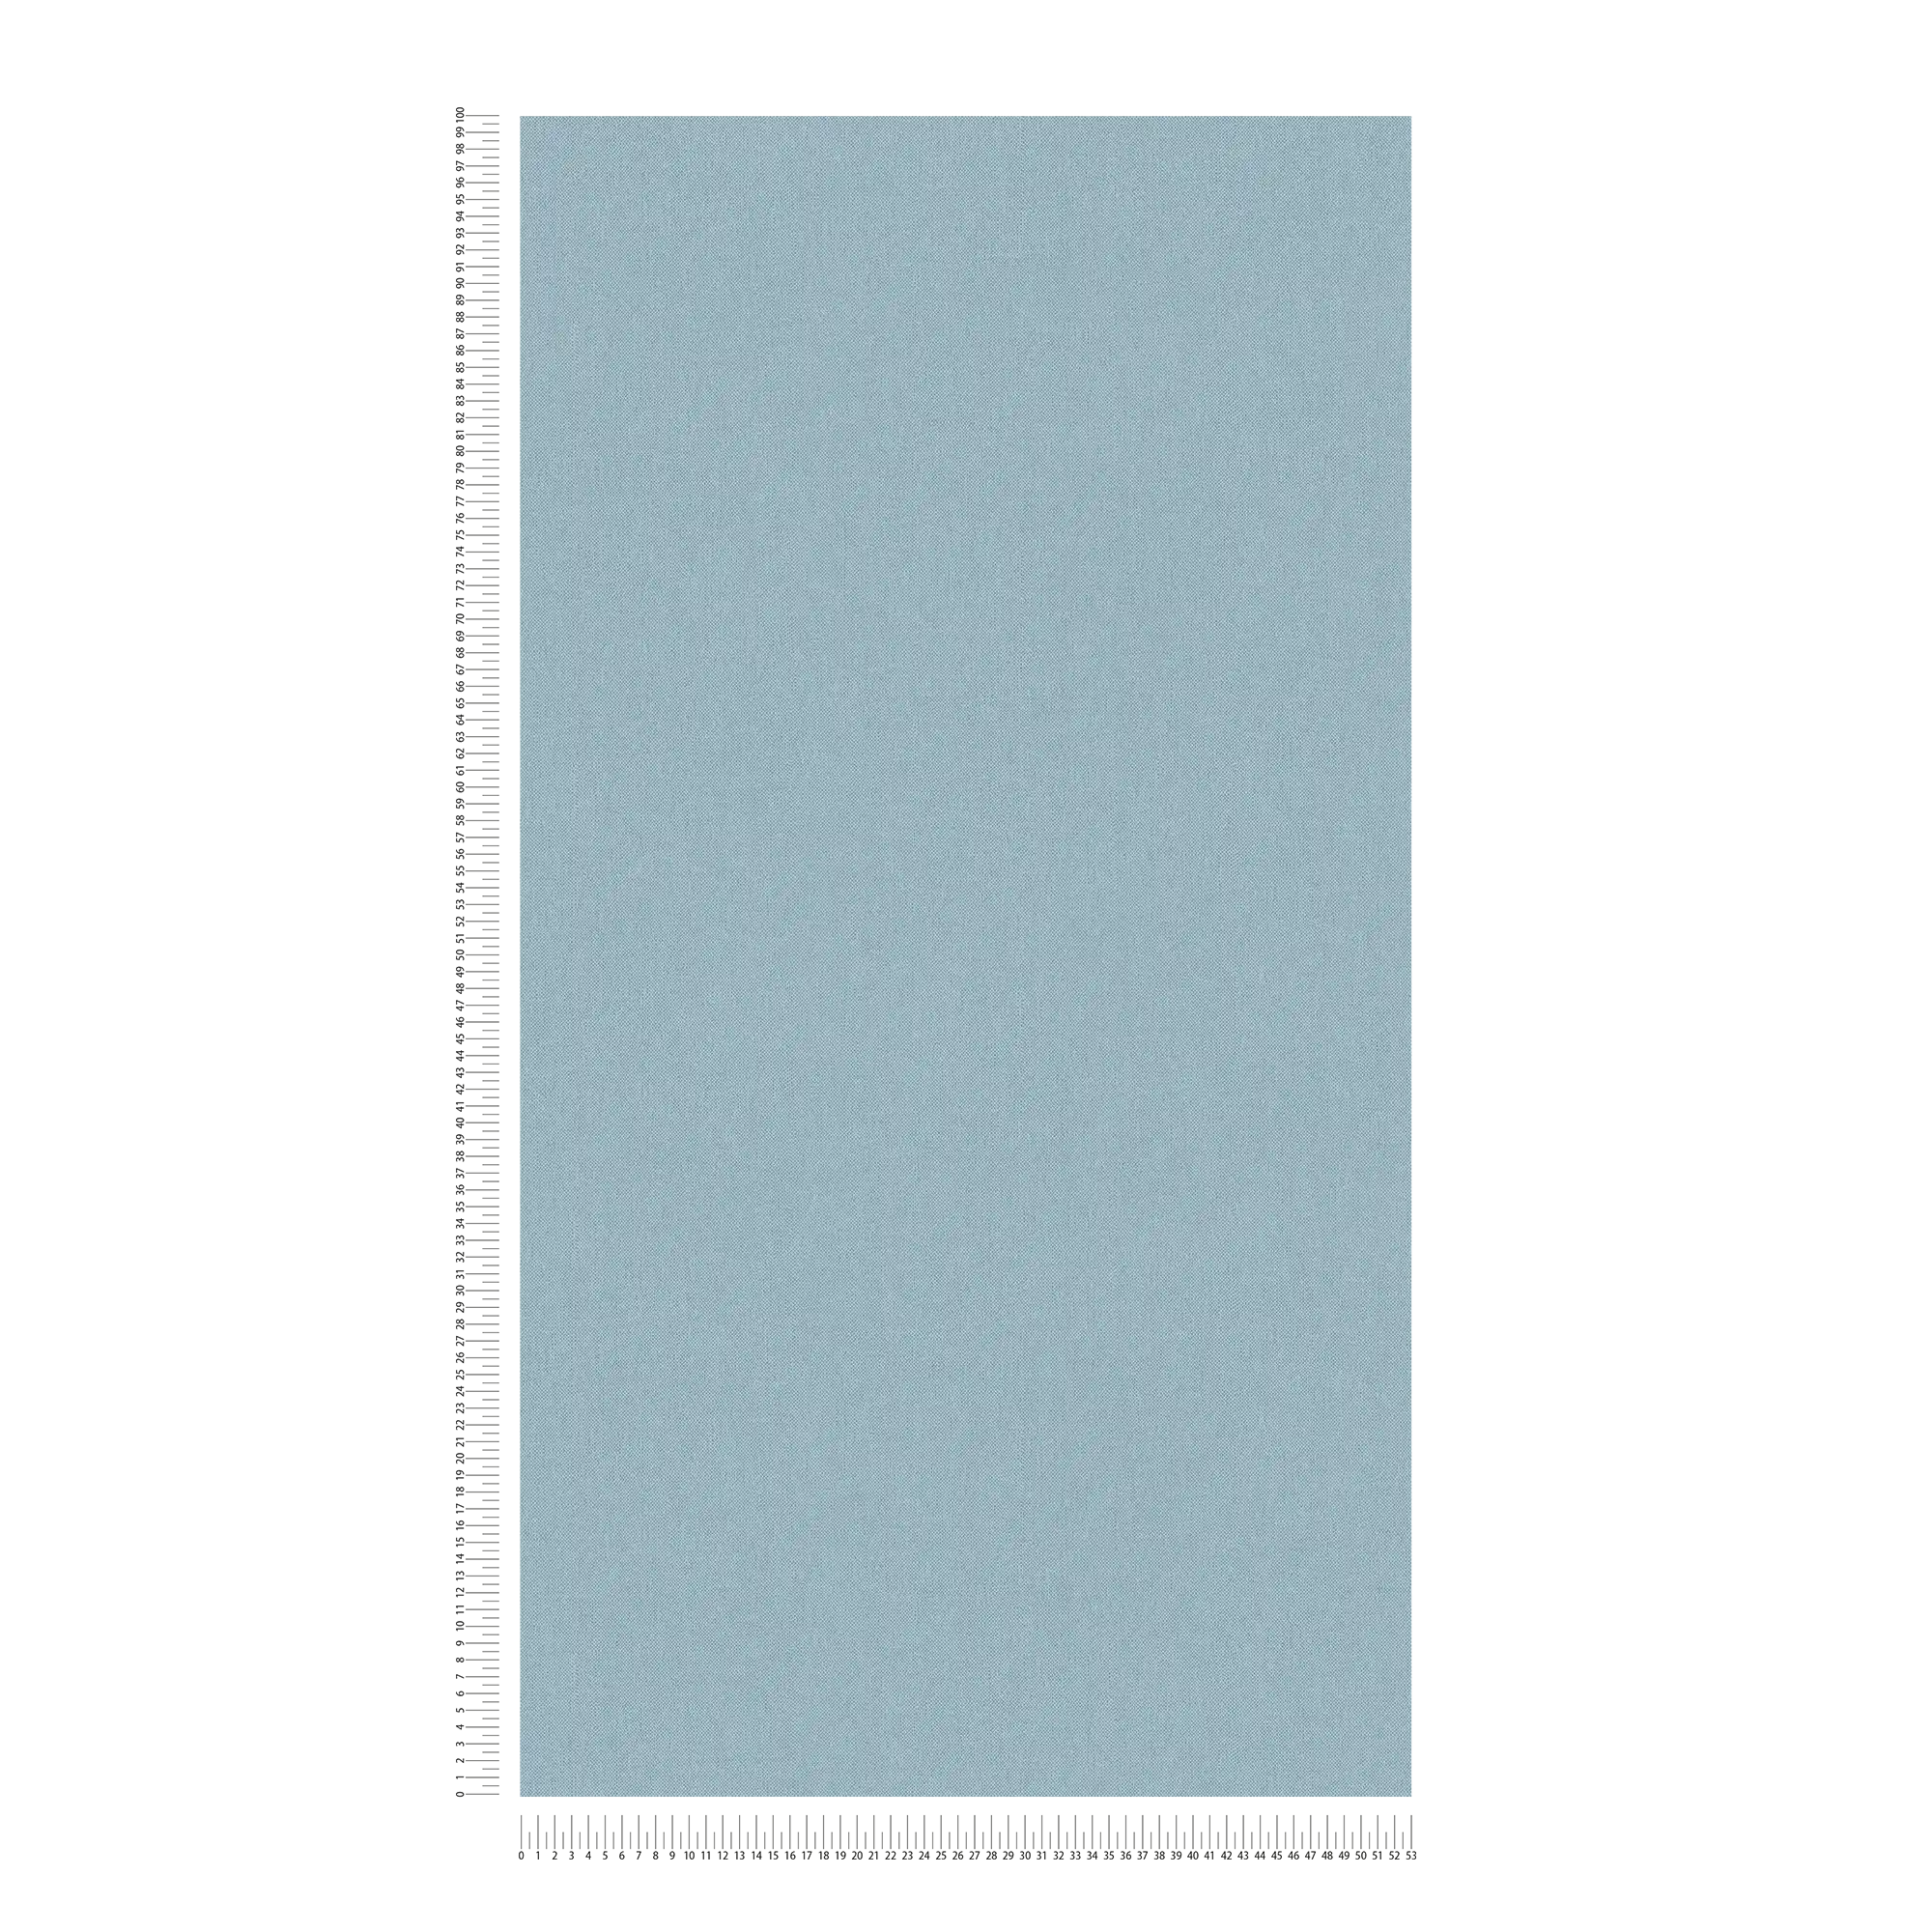             Wallpaper blue grey with fabric texture & matte colour - blue
        